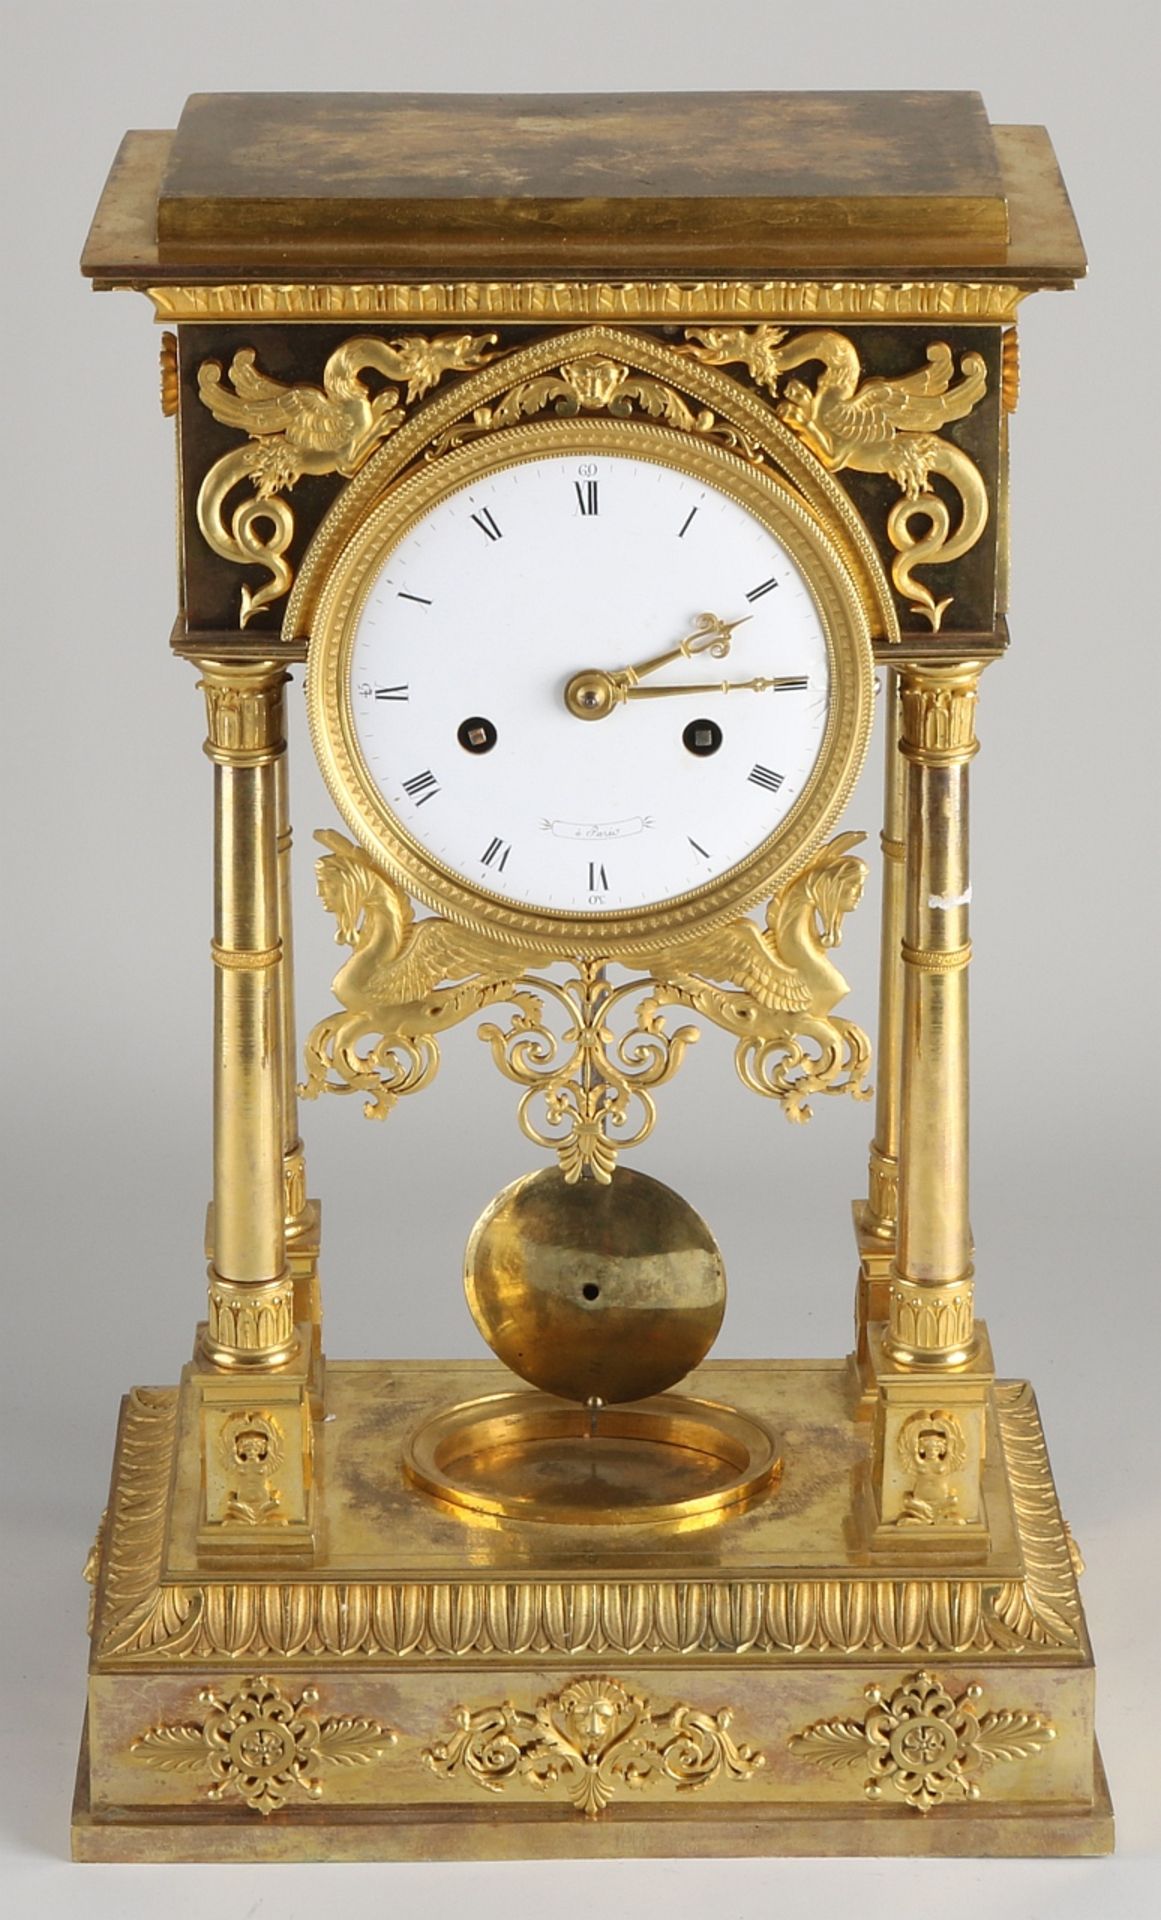 Fire-gilt Louis Seize mantel clock